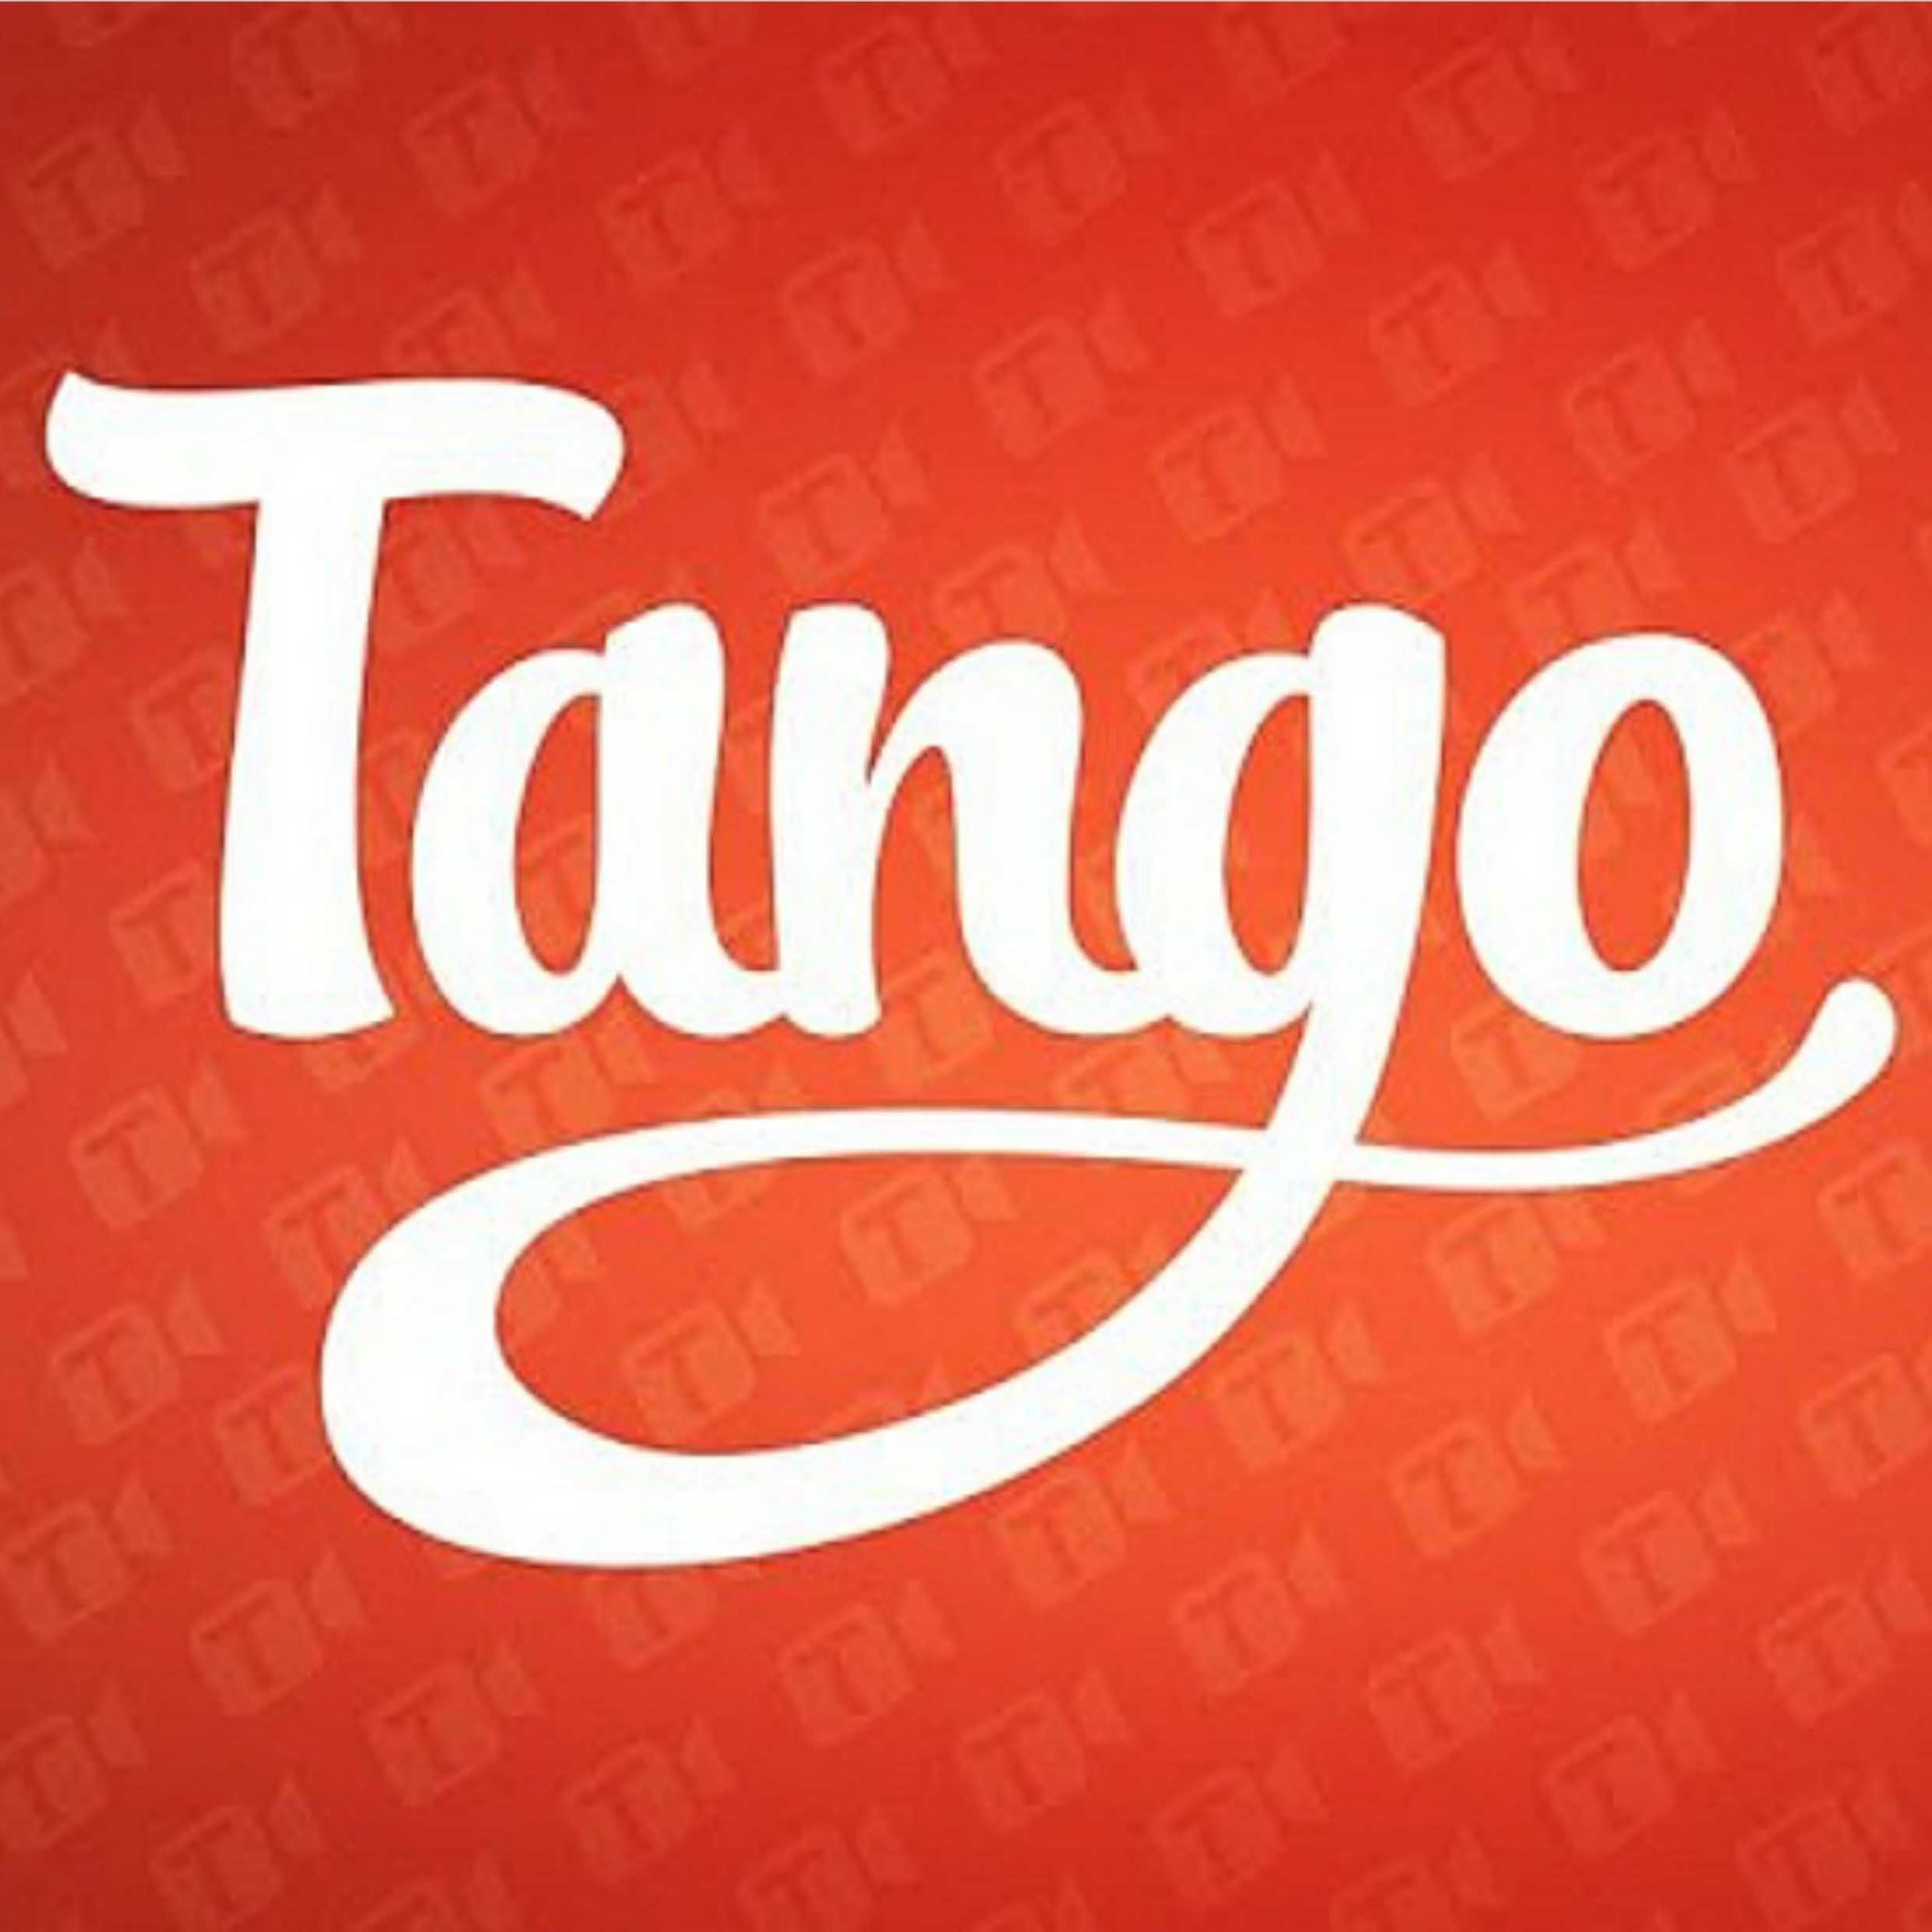 Download tango app